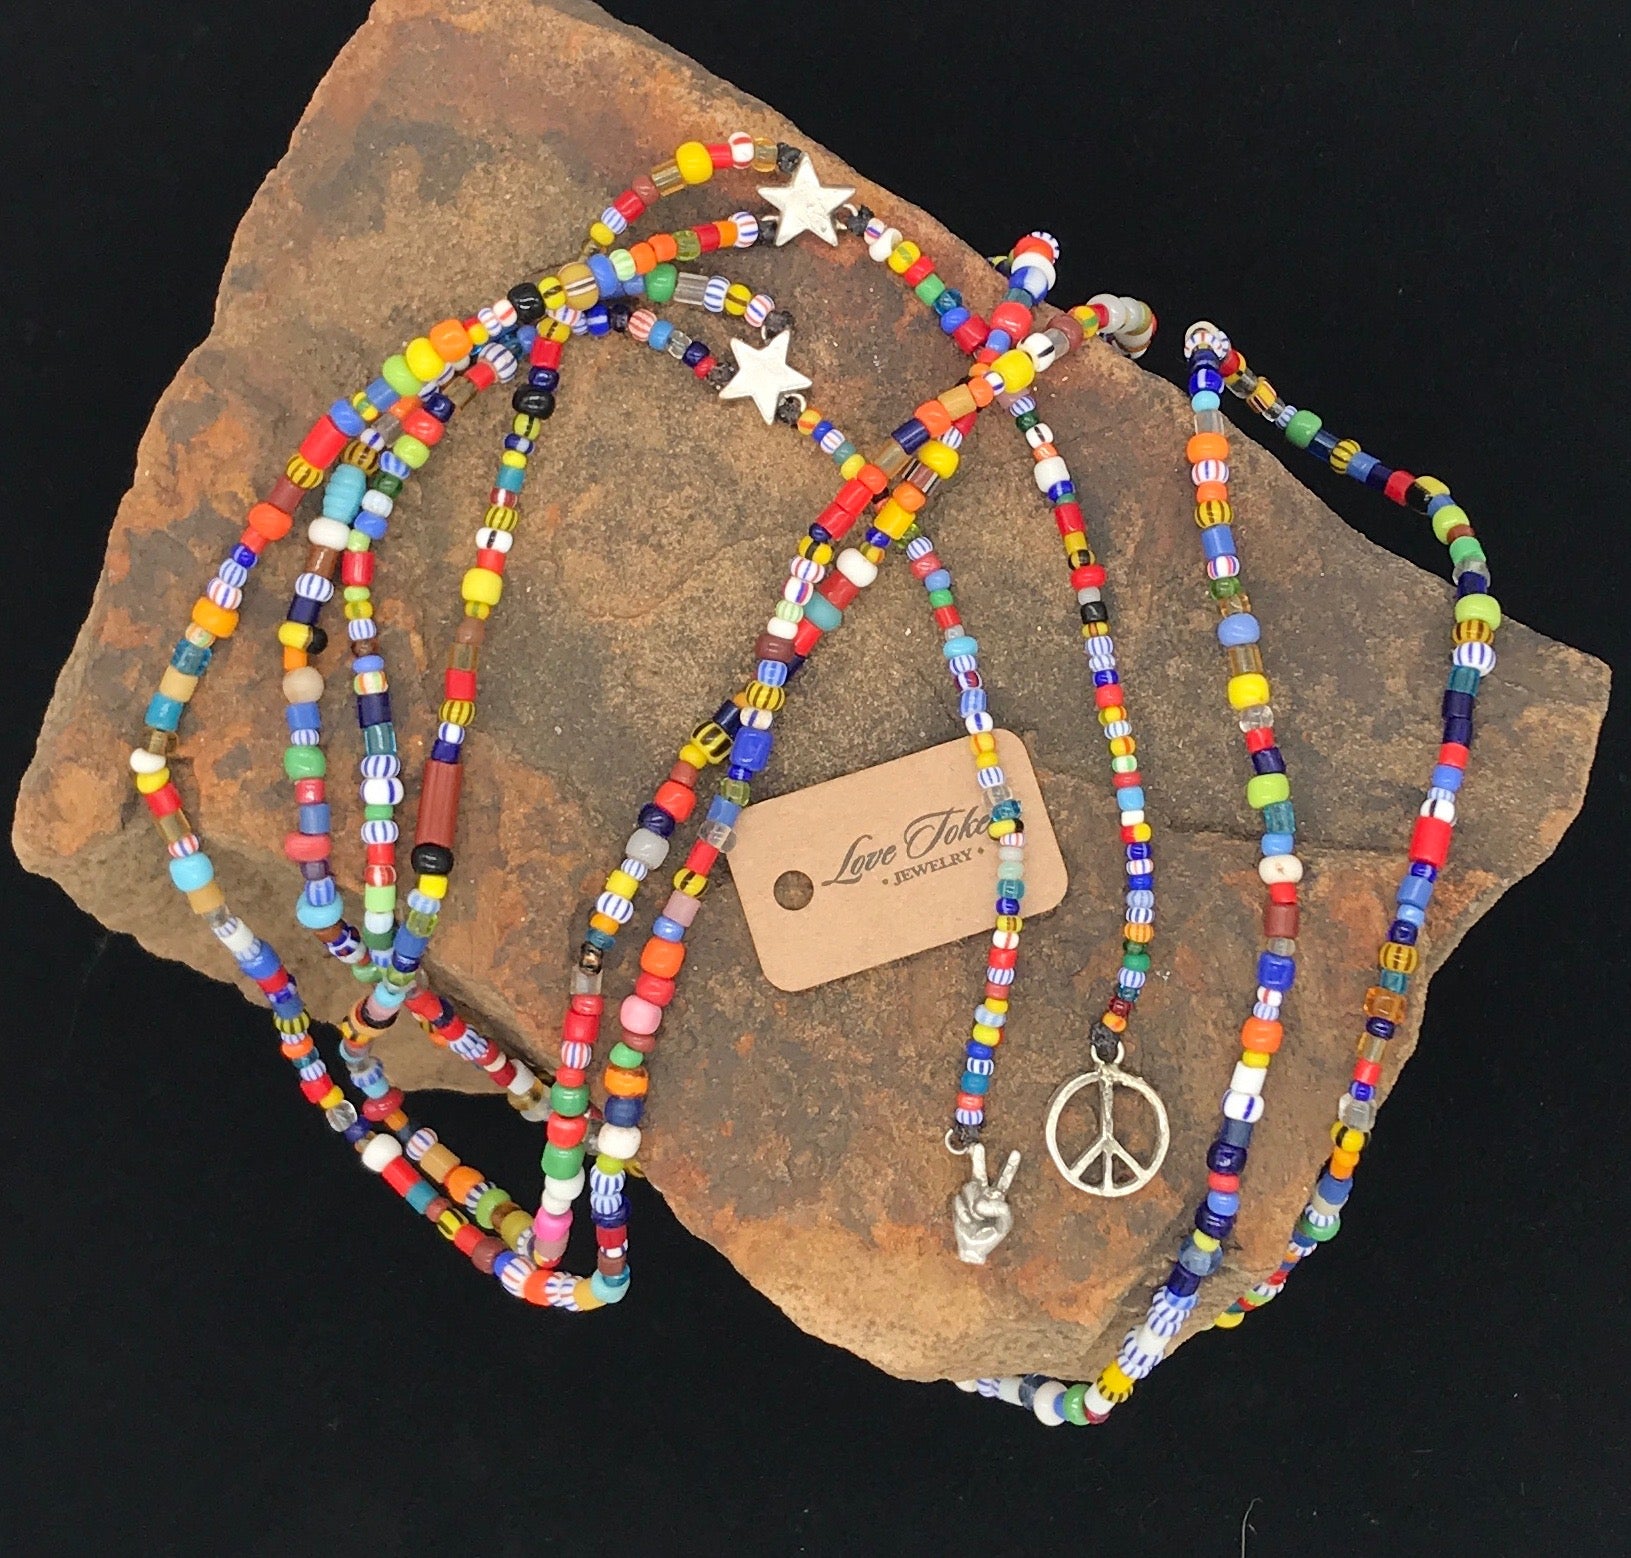 Tourmaline Bead Necklace | Earthy, Hand-Ground Love Beads